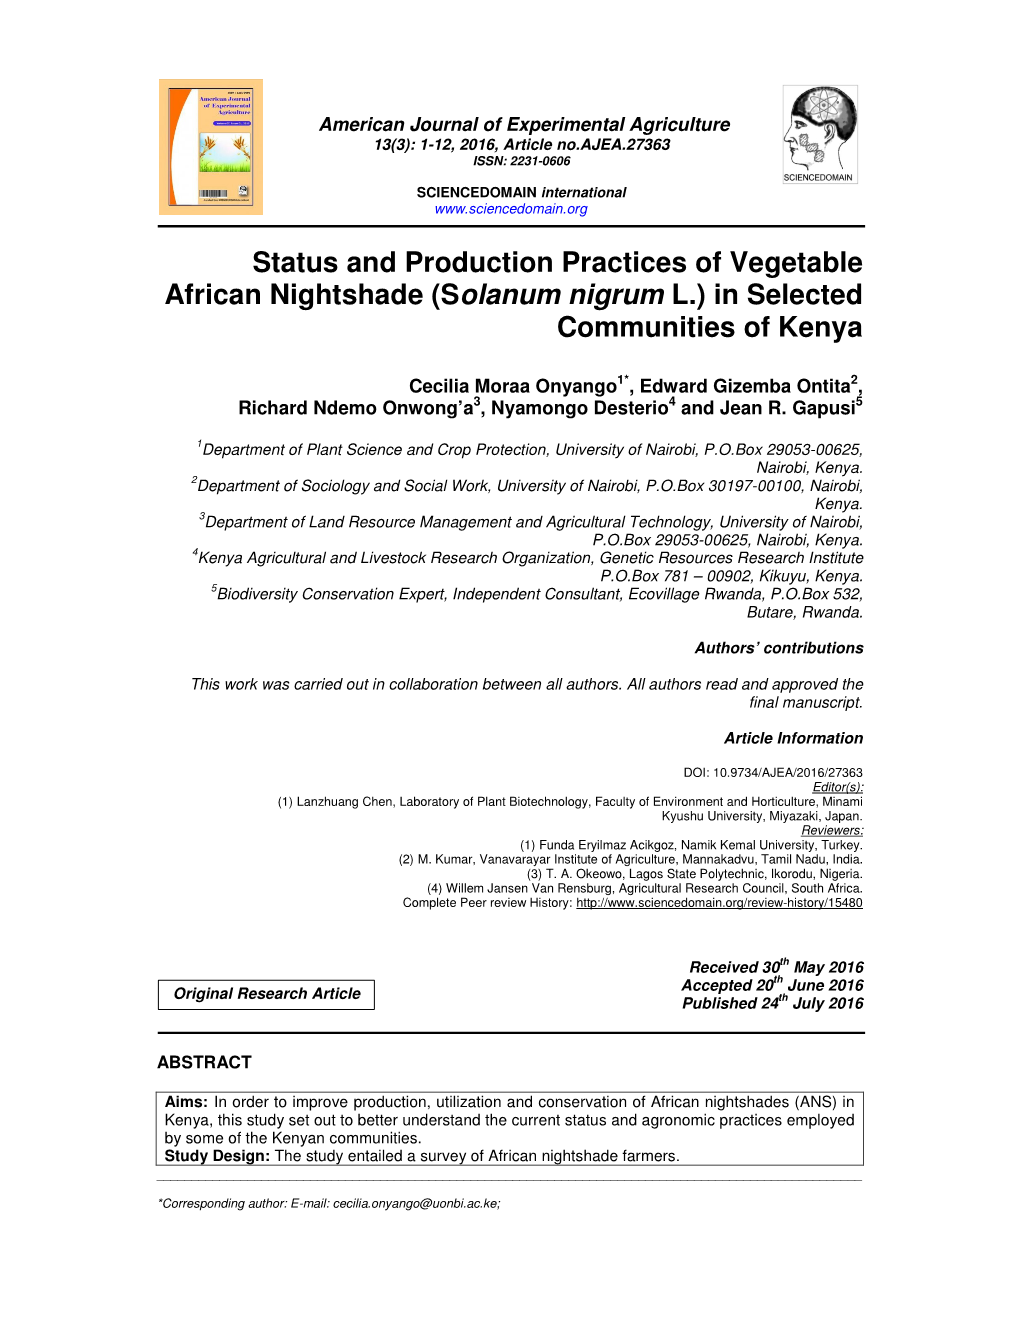 Status and Production Practices of Vegetable African Nightshade (S Olanum Nigrum L.) in Selected Communities of Kenya